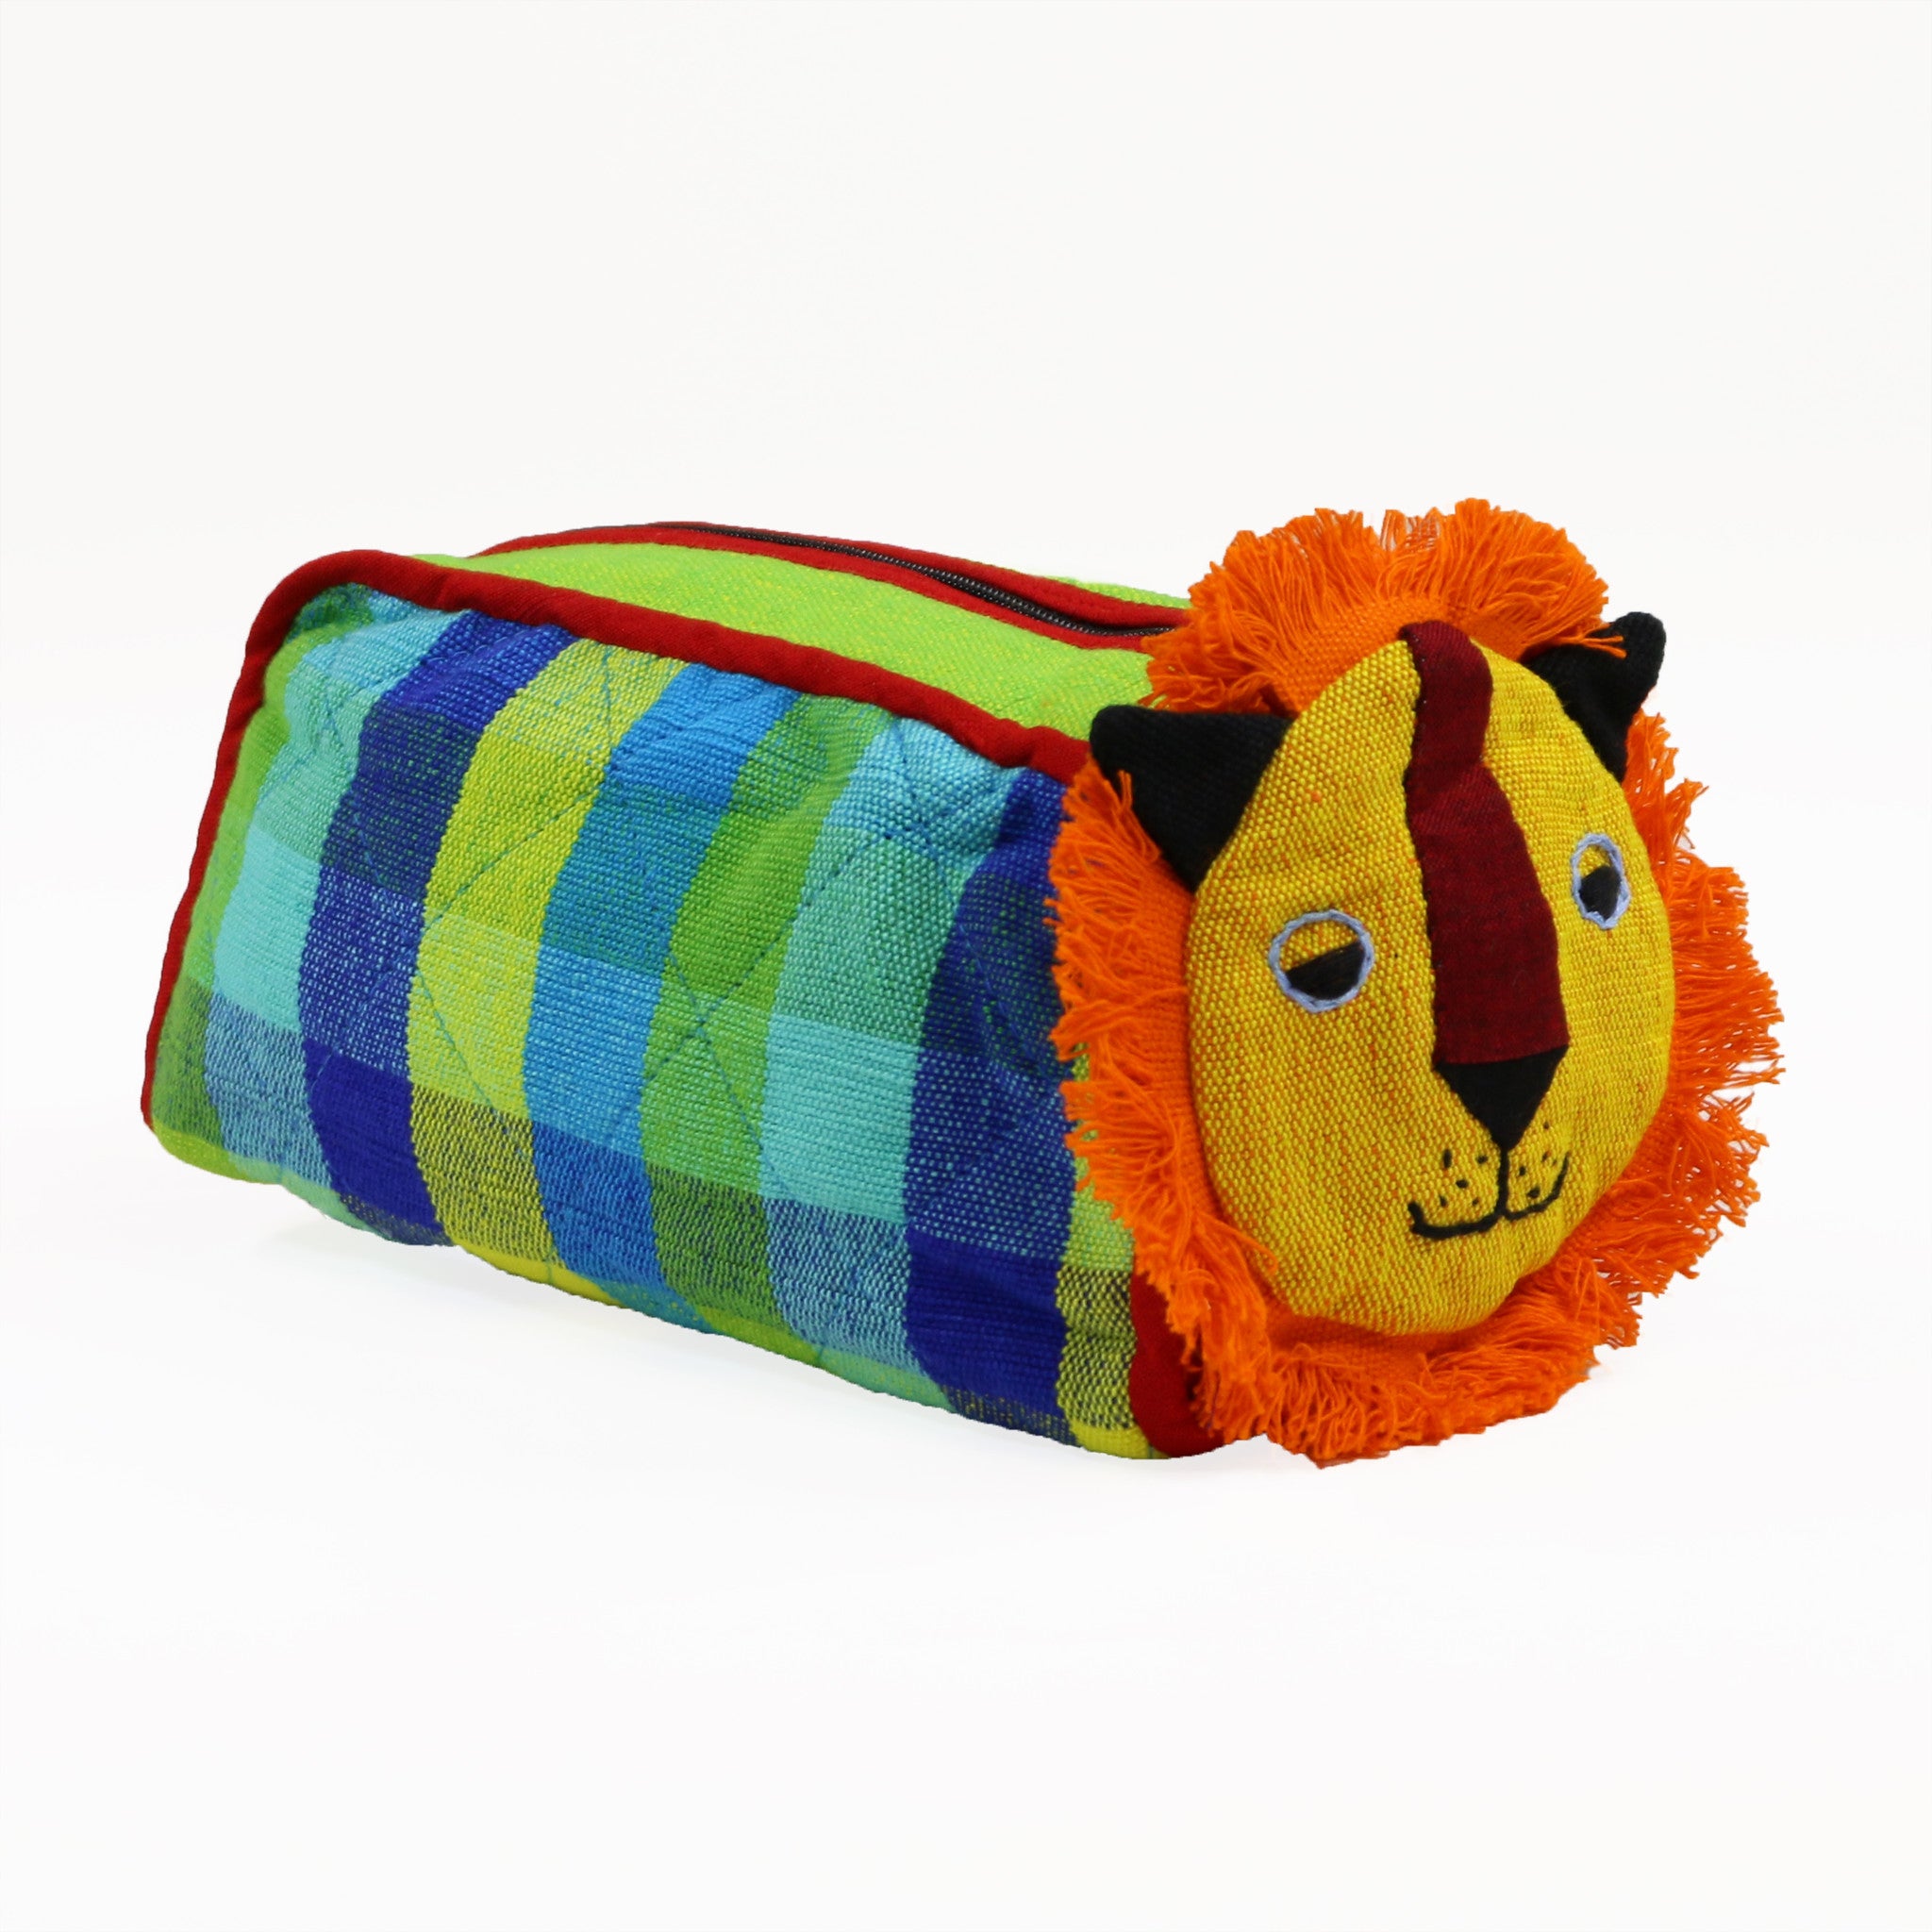 Lion Zip Pouch - Grasshopper fabric